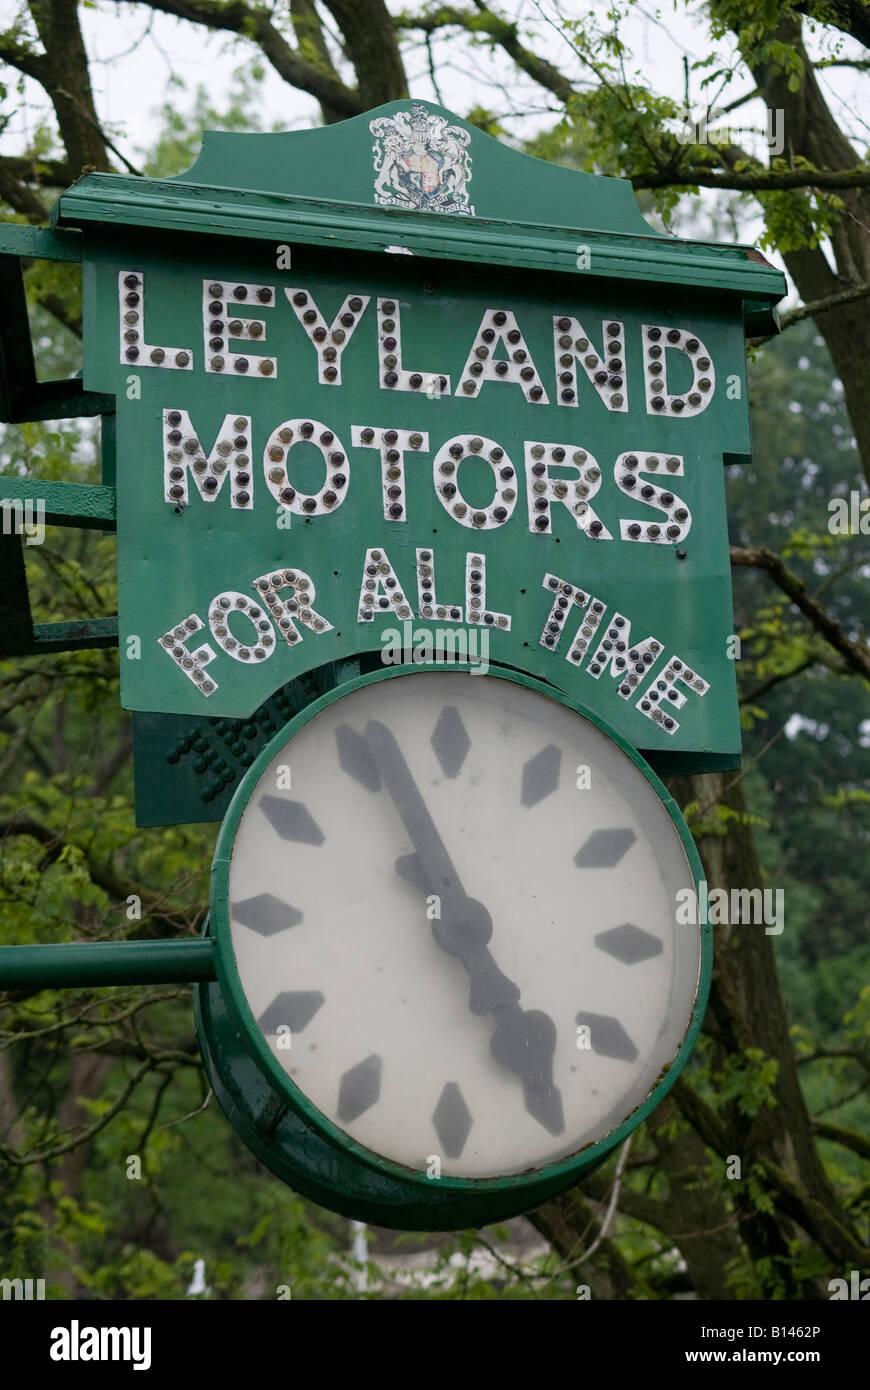 leyland motors works clock Stock Photo